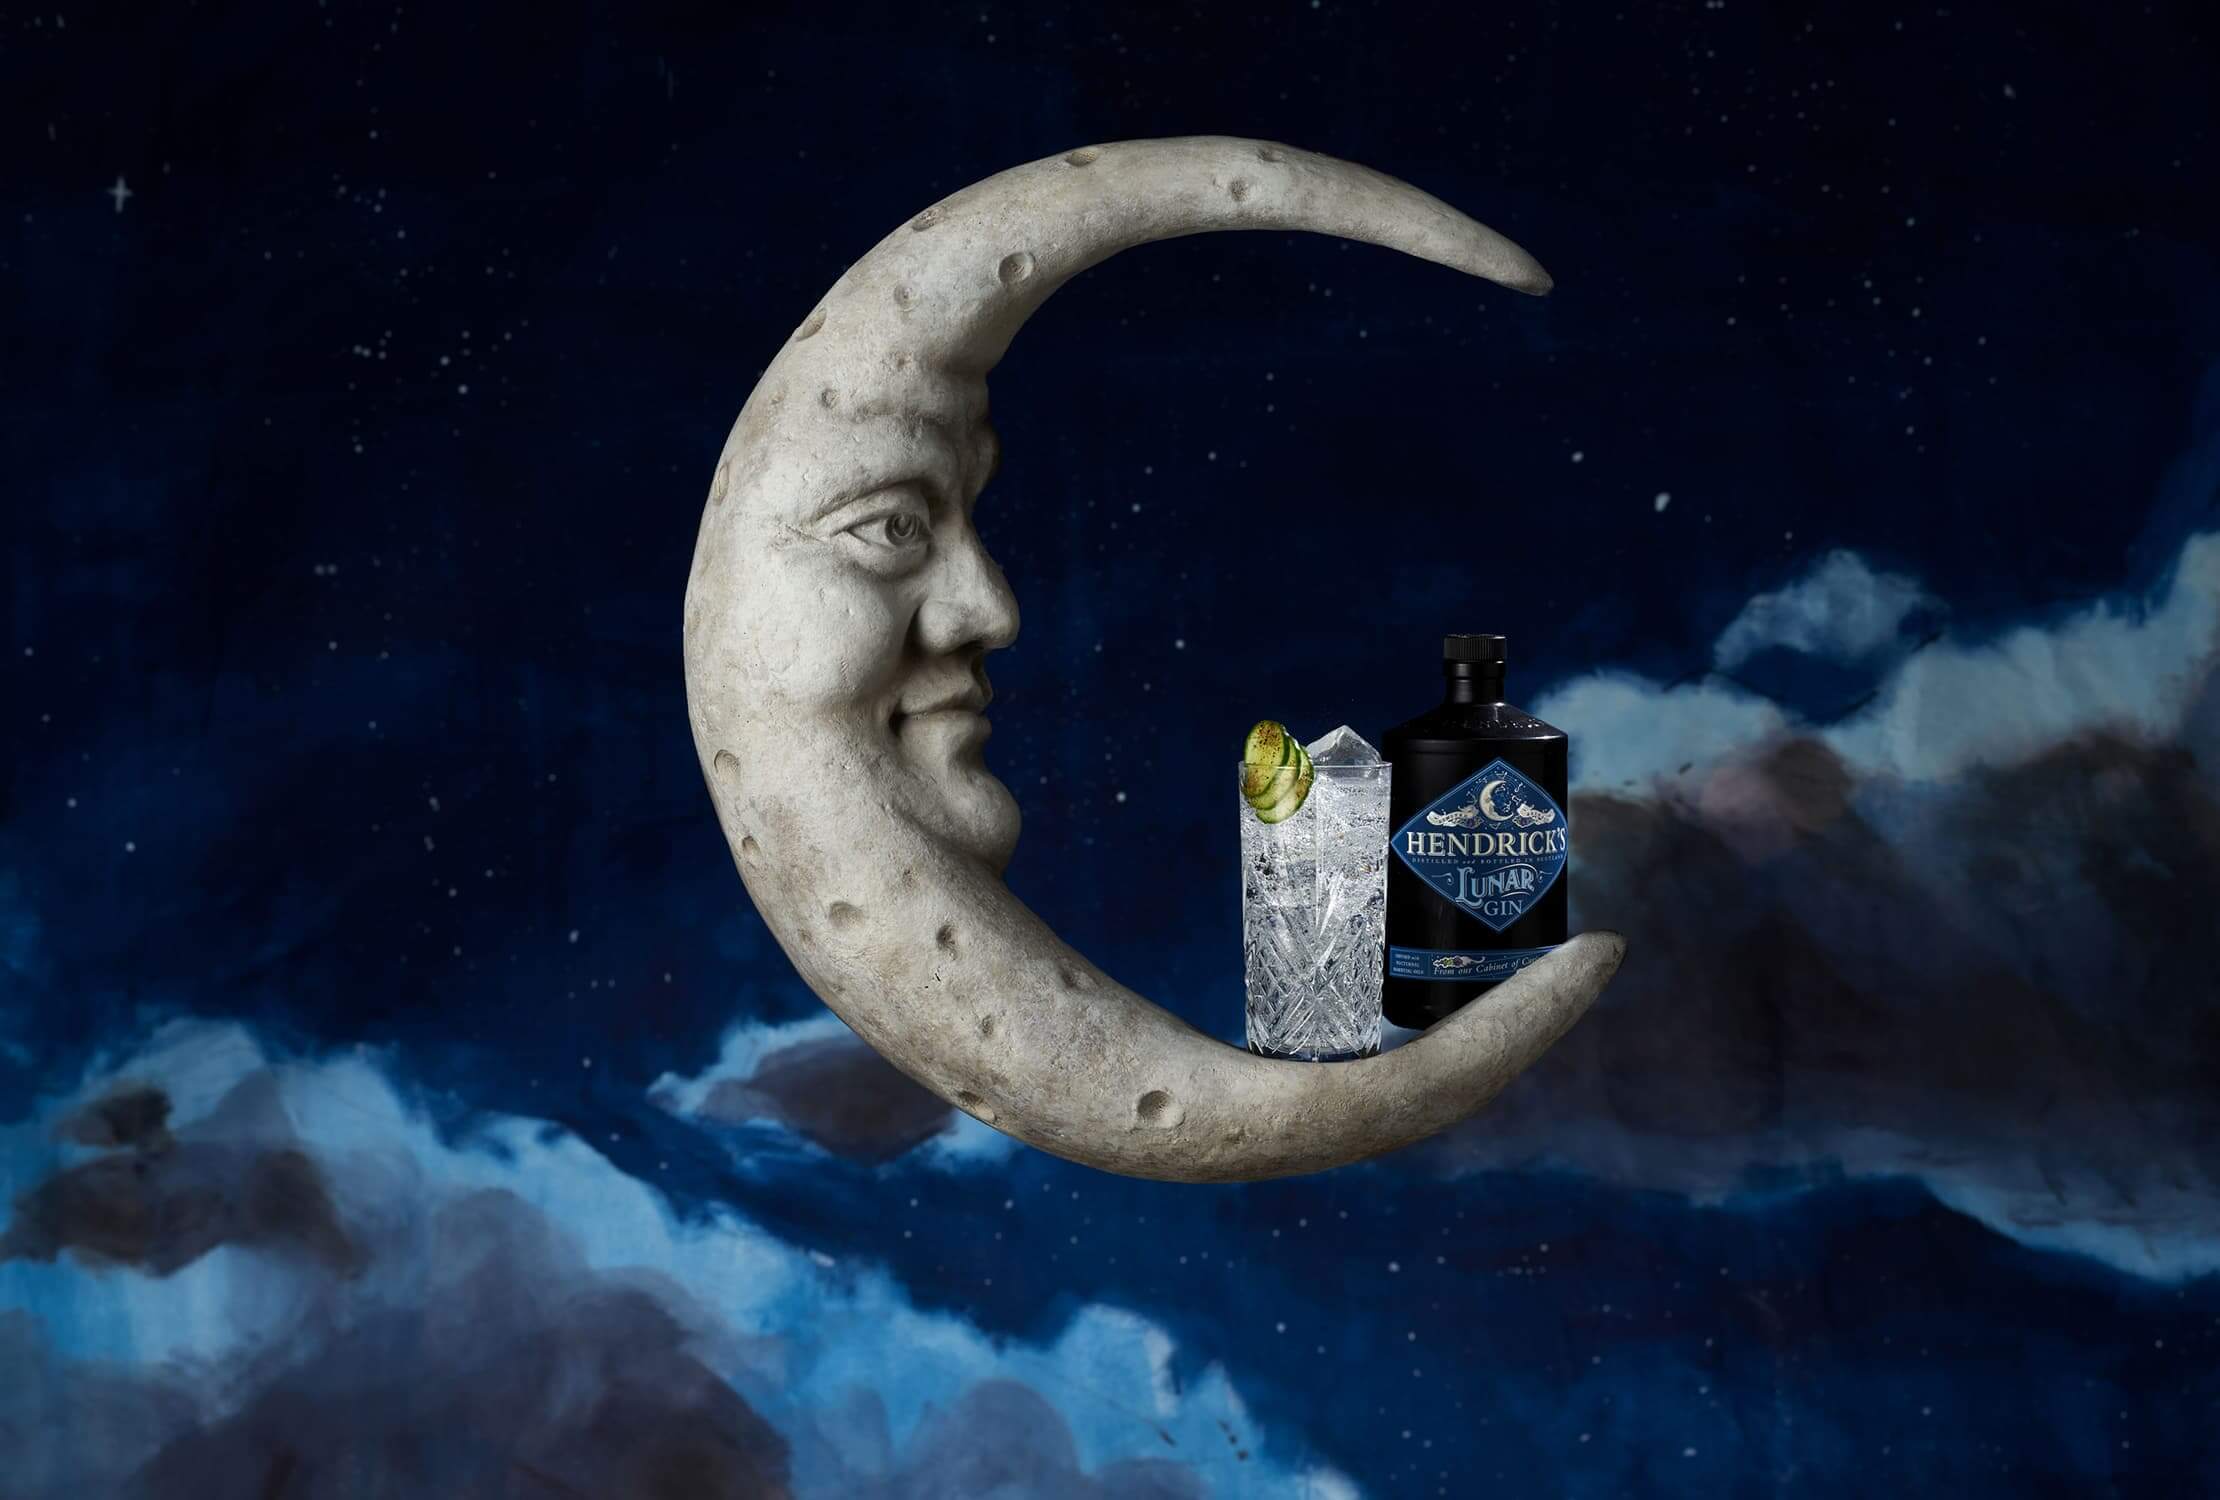 Hendrick’s Lunar Gin sat on a moon